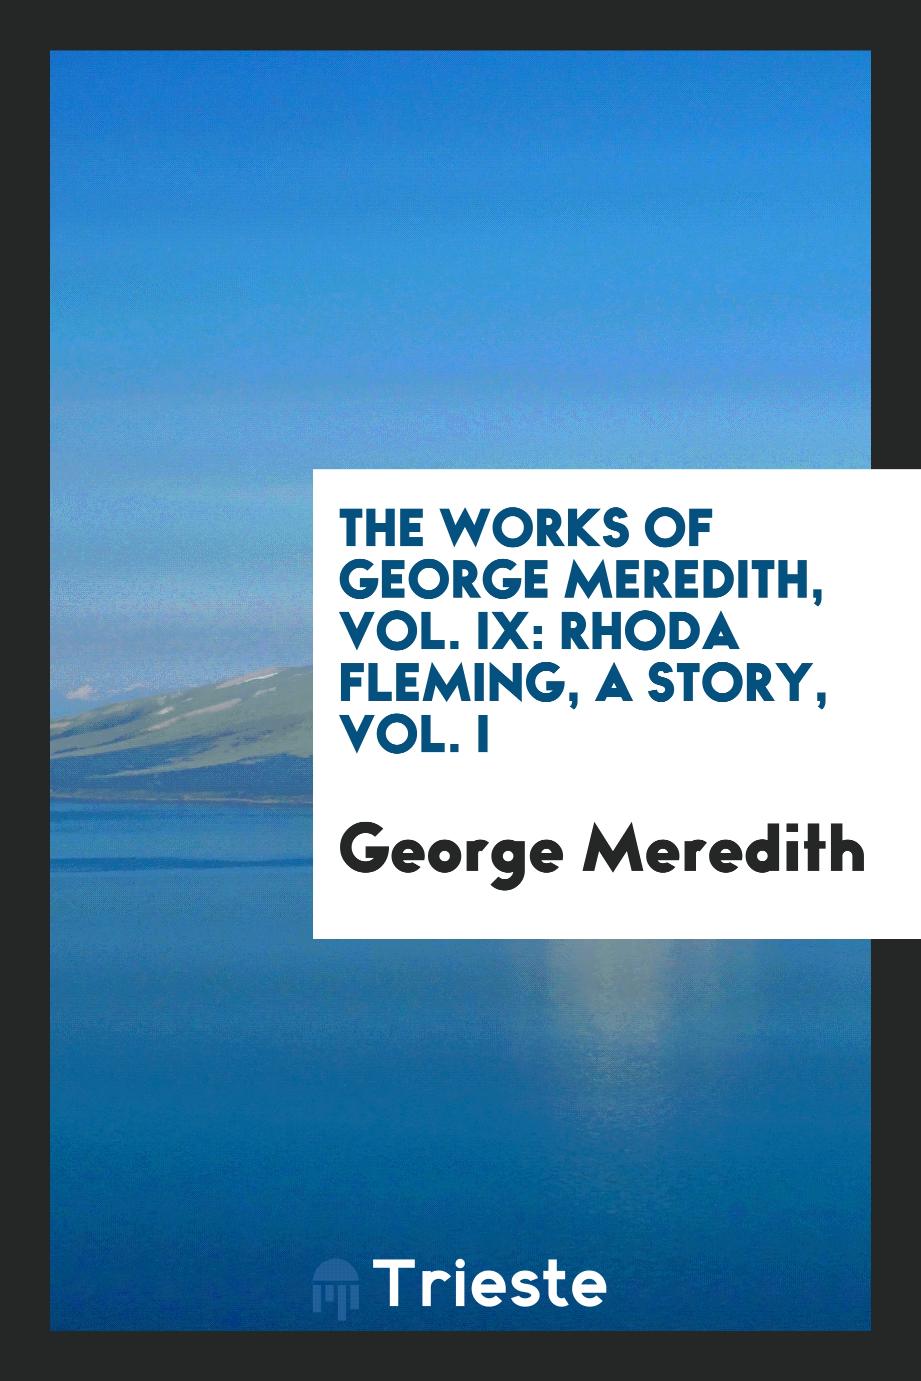 The Works of George Meredith, Vol. IX: Rhoda Fleming, a story, Vol. I